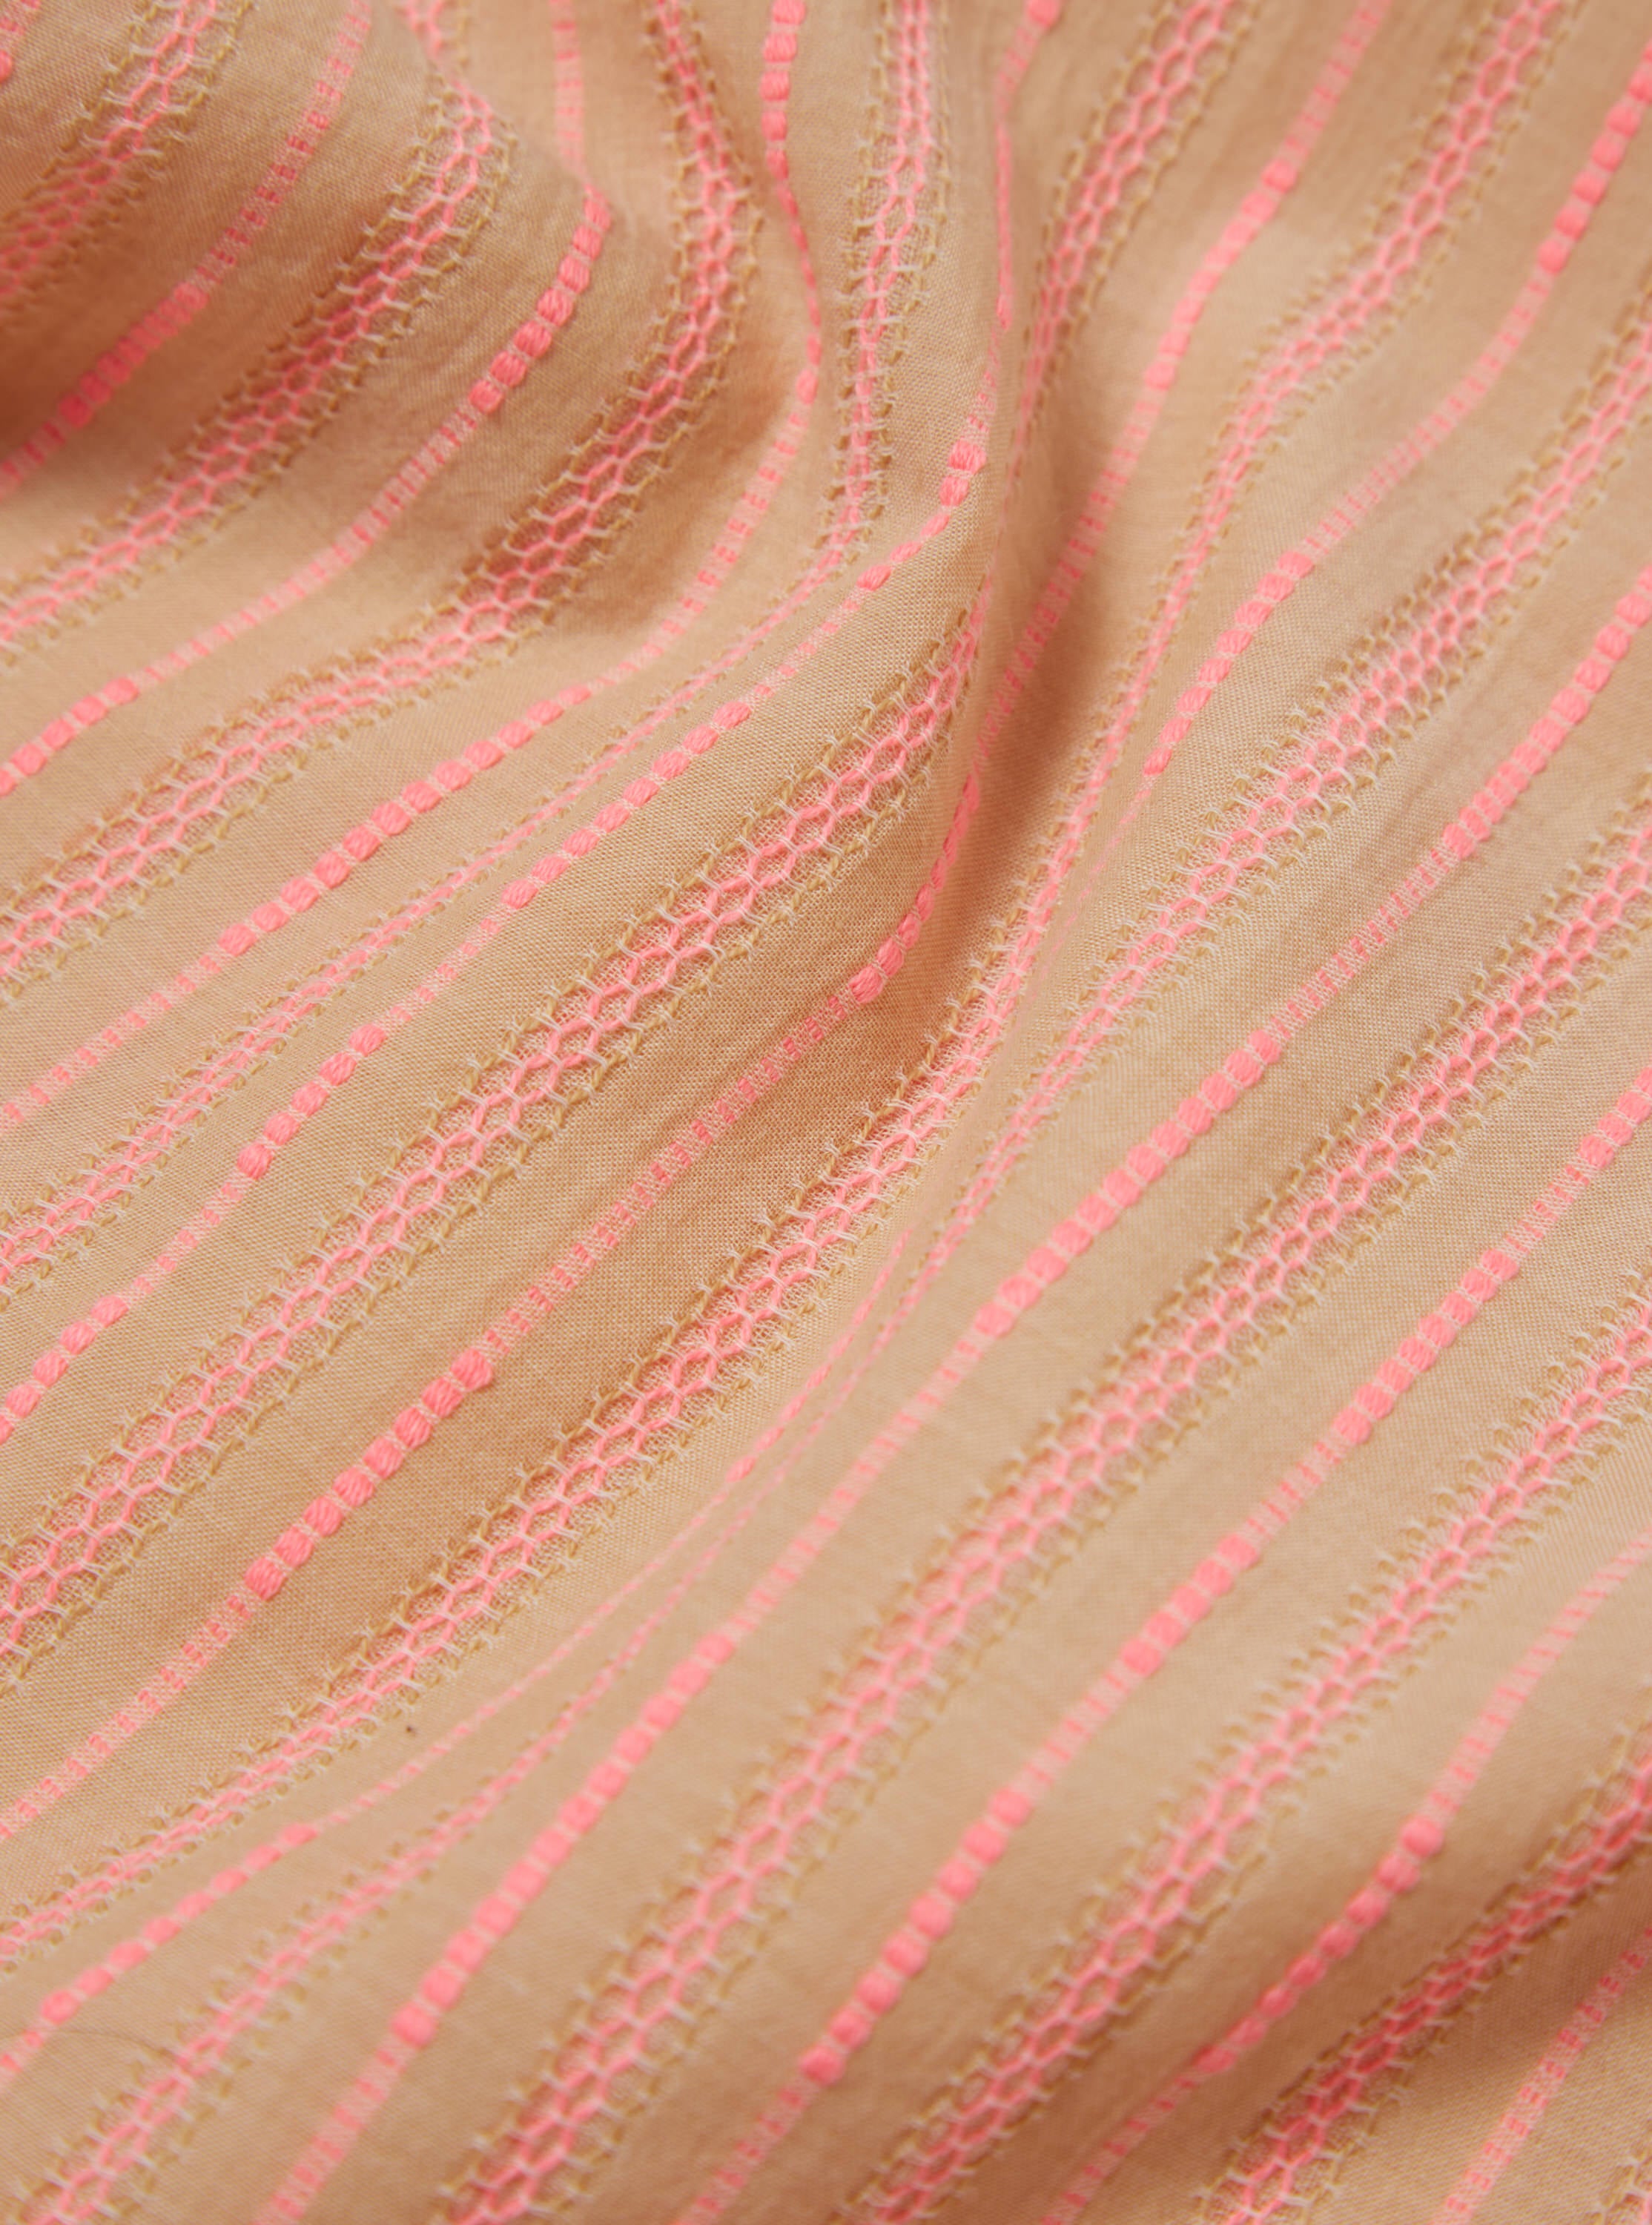 Universal Works Road Shirt in Beige/Pink Fluro Cotton